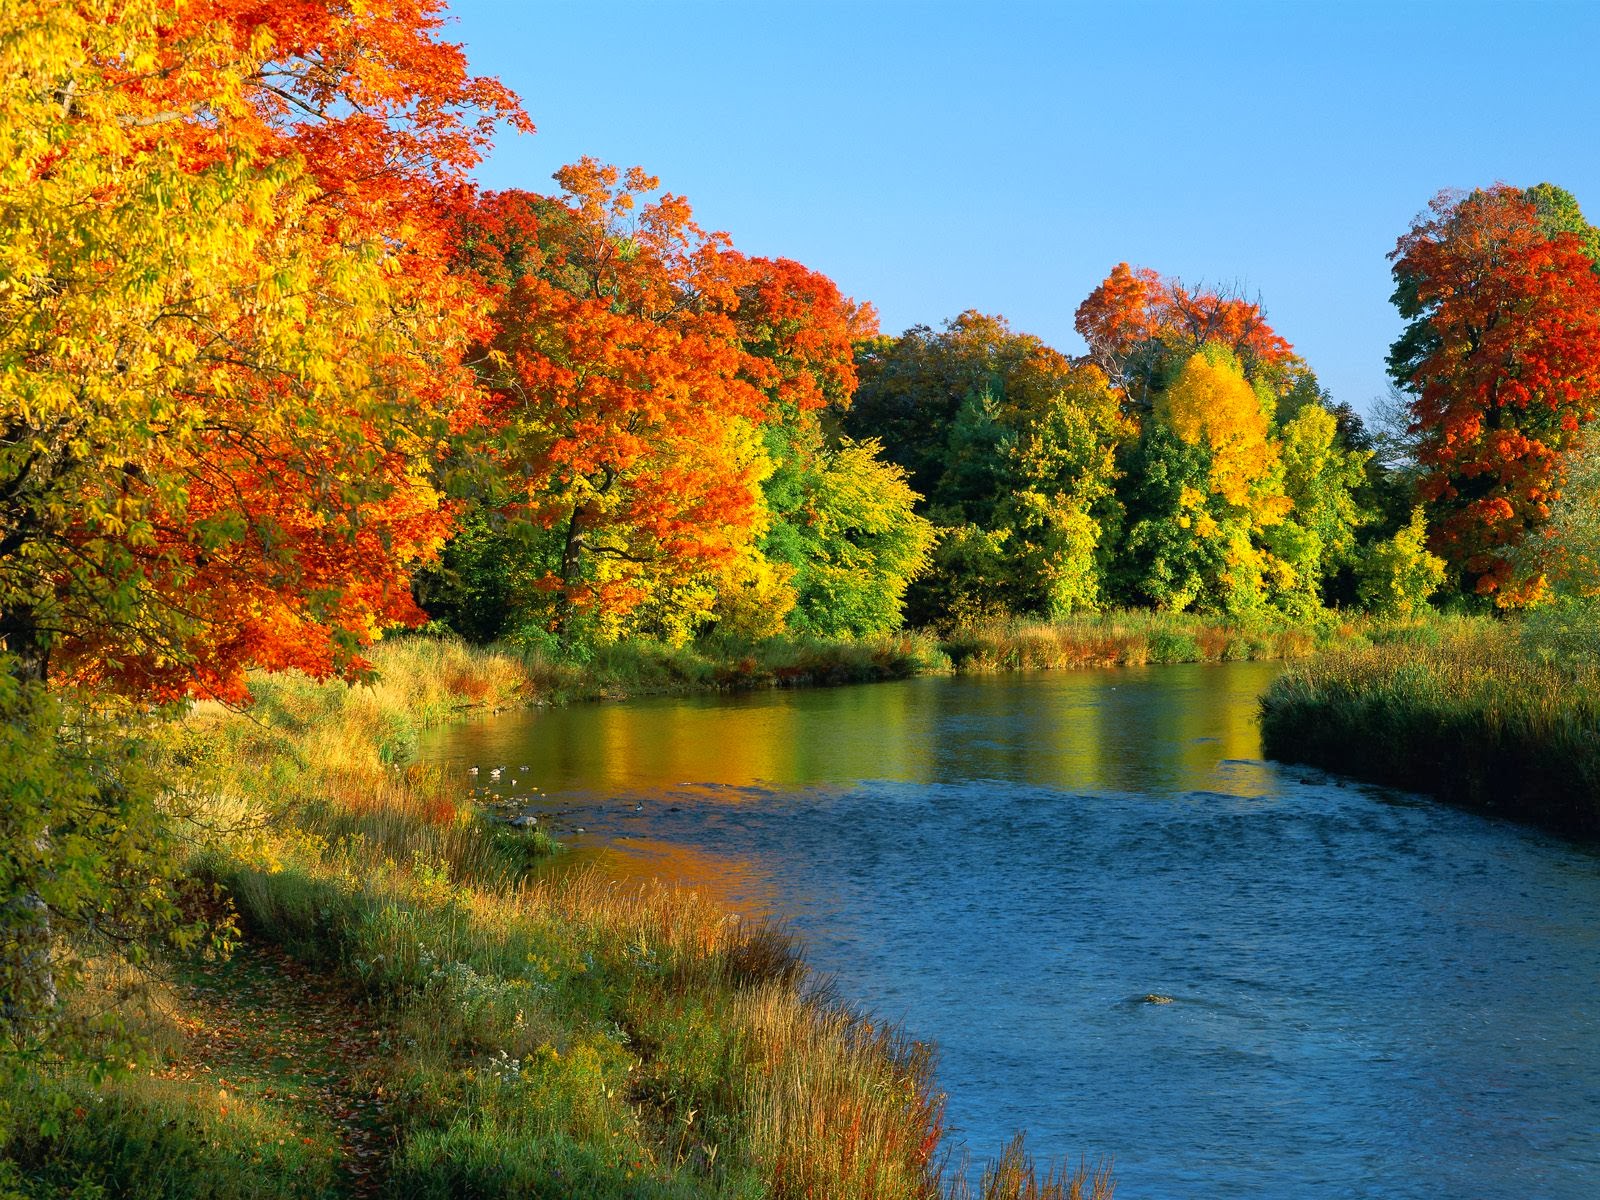 autumn nature wallpaper,natural landscape,nature,reflection,tree,leaf